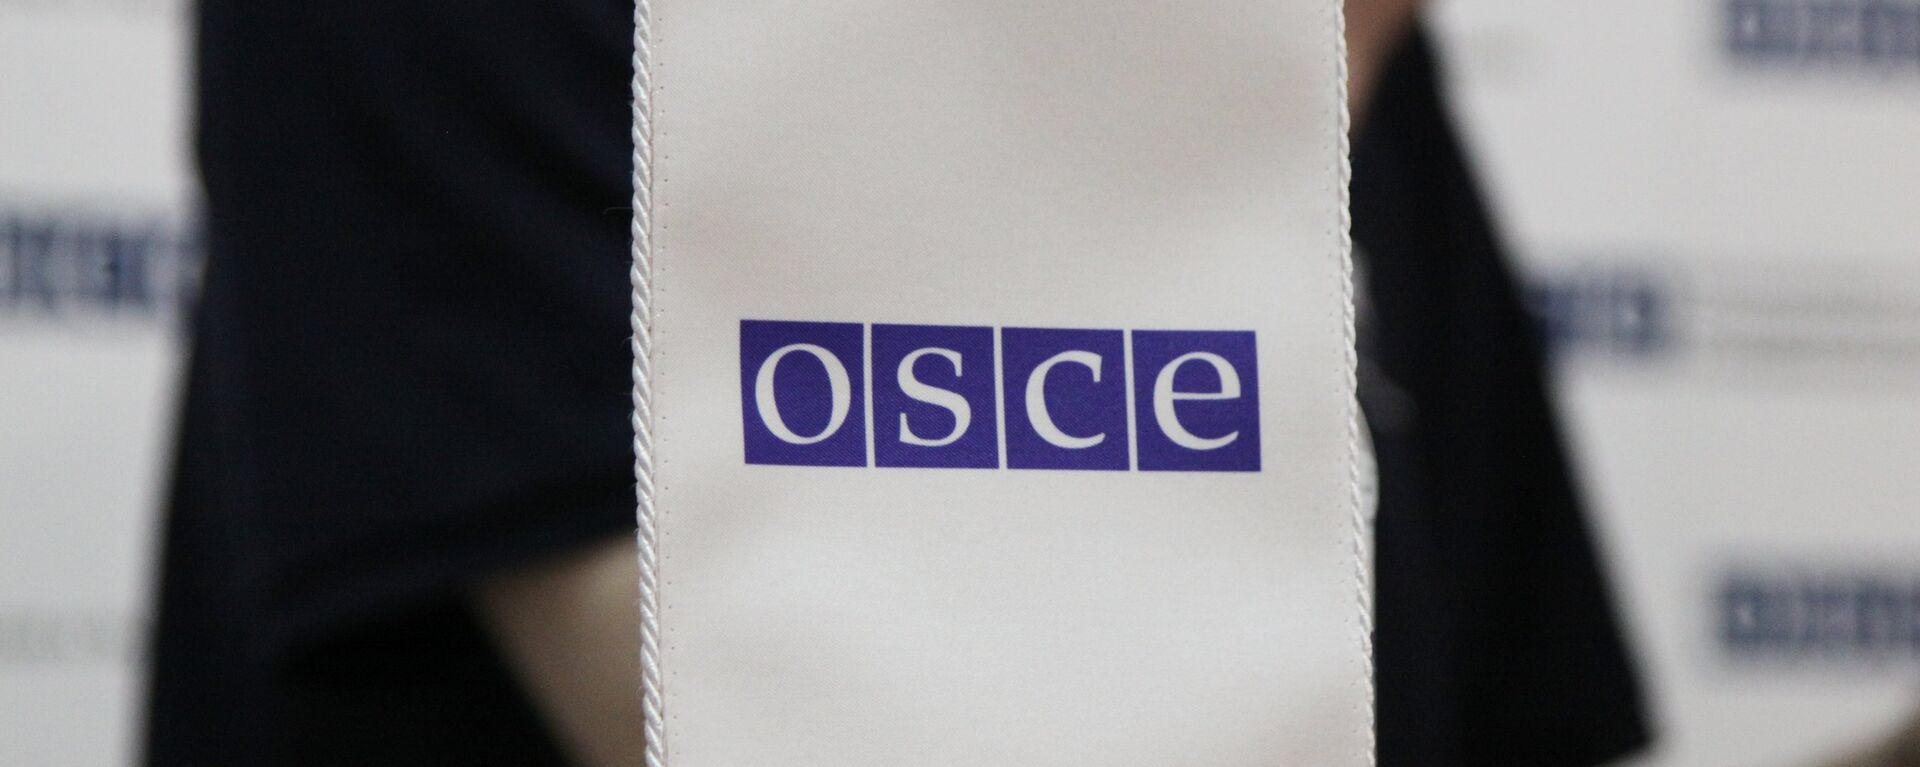 Logo de la OSCE - Sputnik Mundo, 1920, 10.02.2021